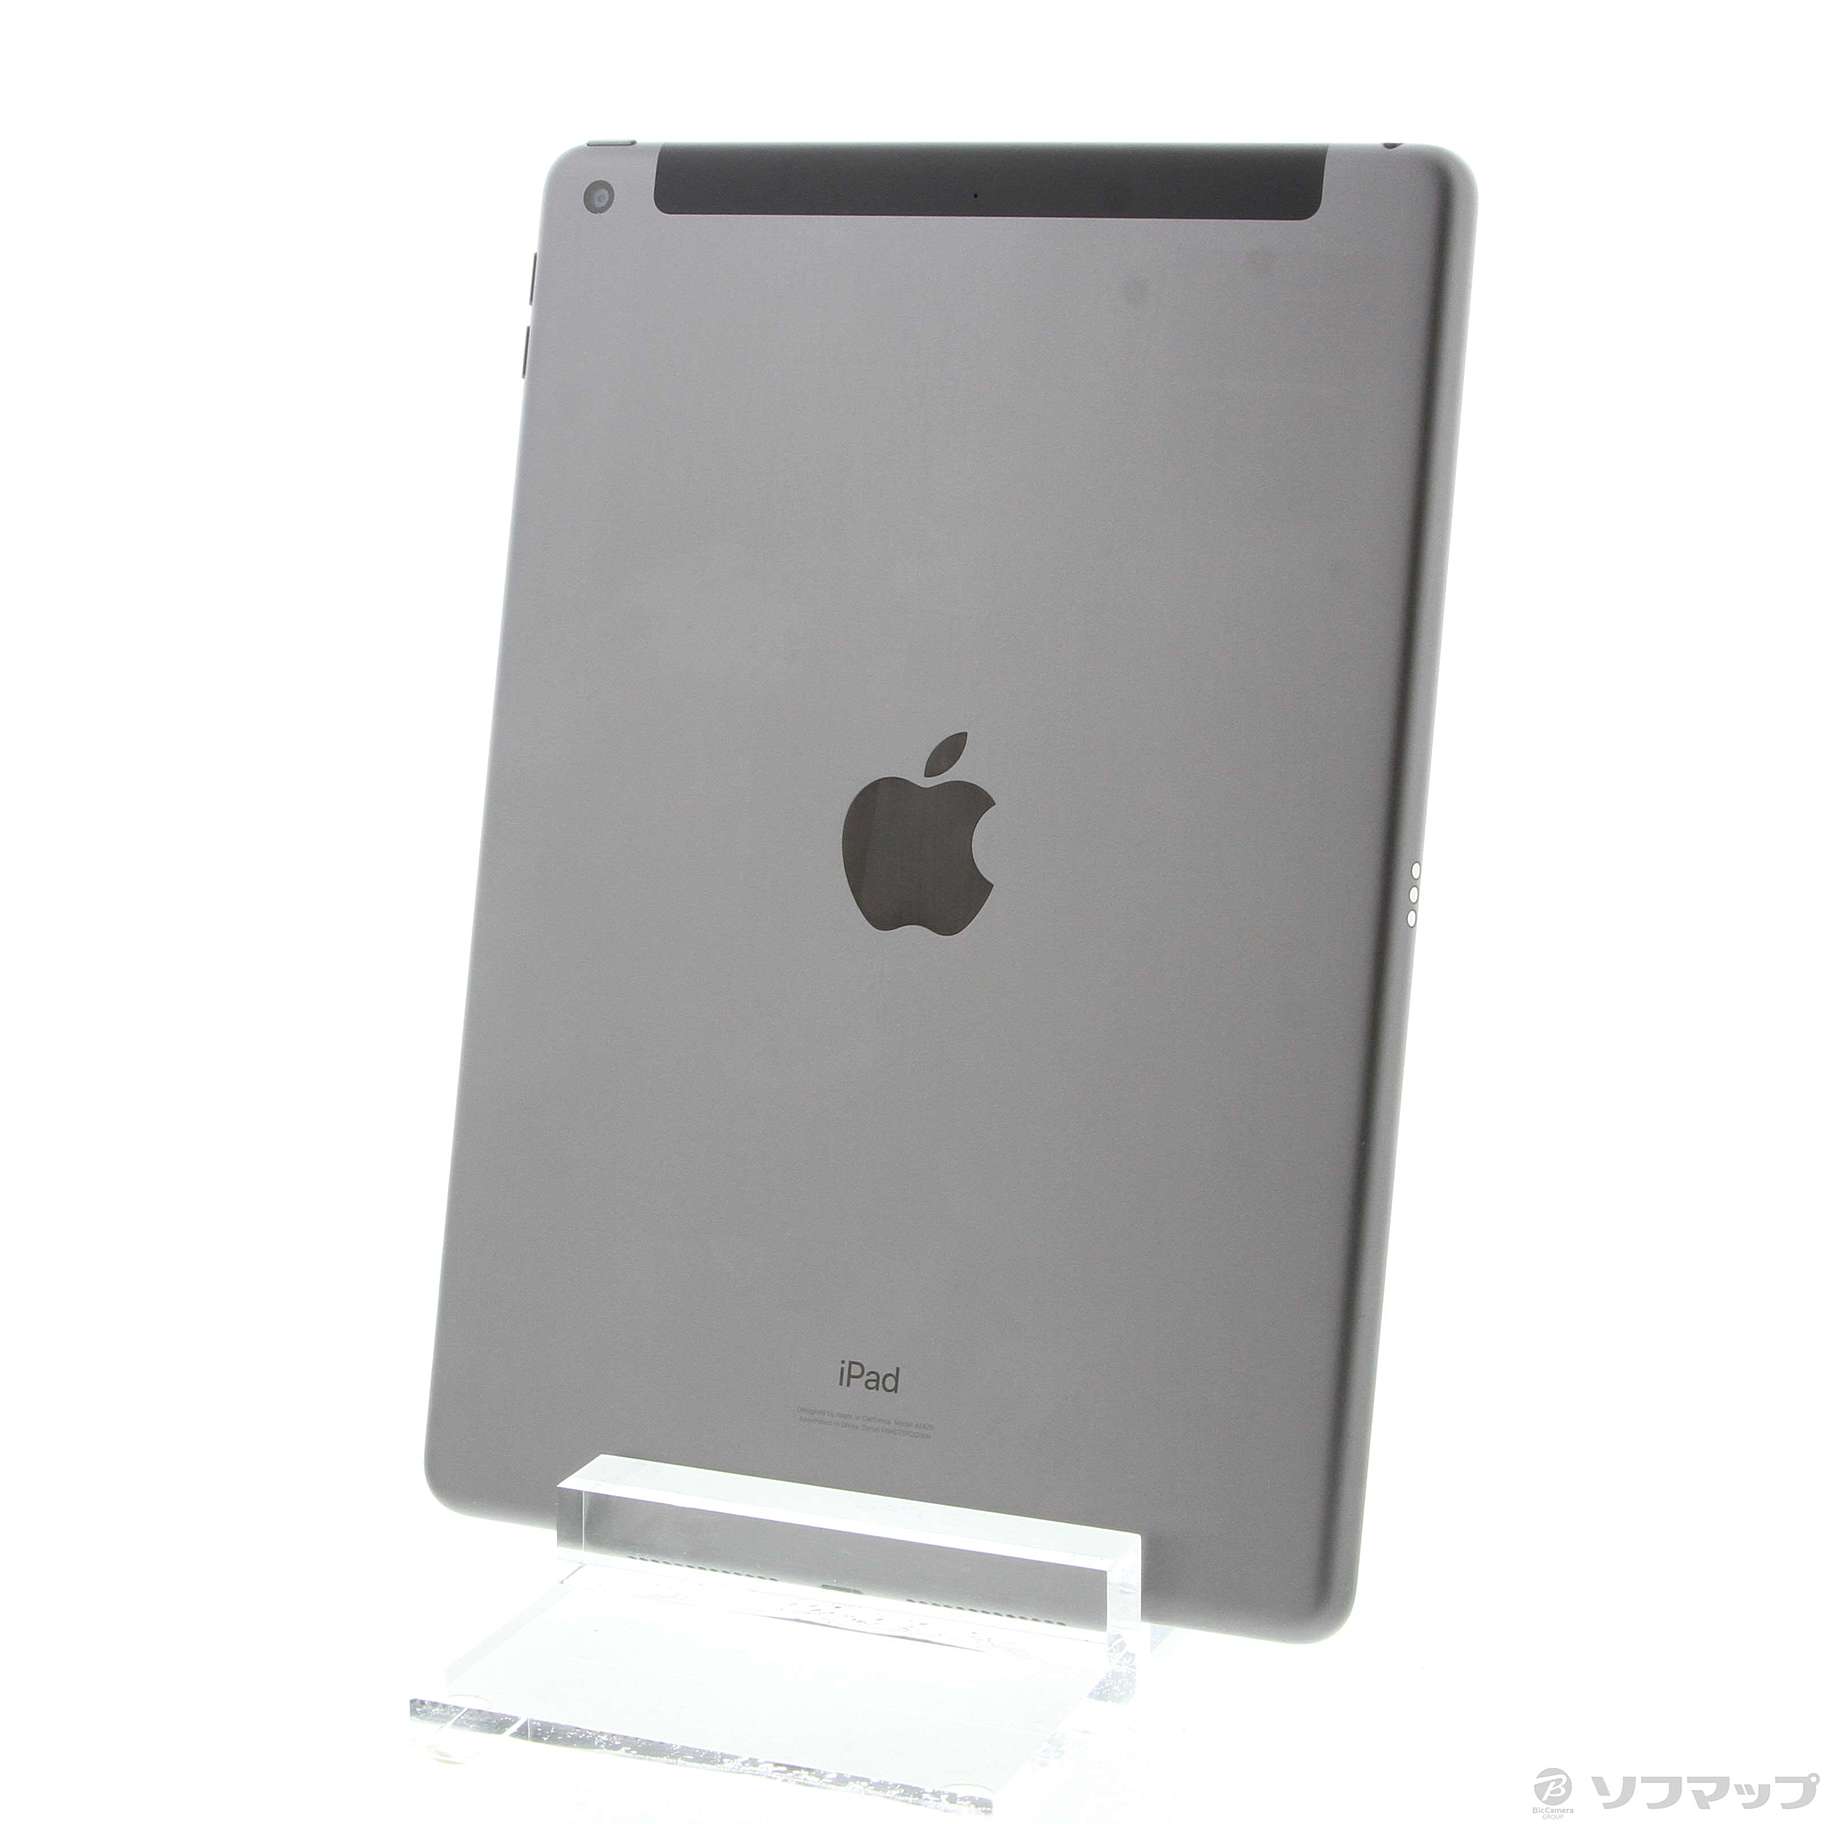 iPad第8世代 32GB スペースグレイ